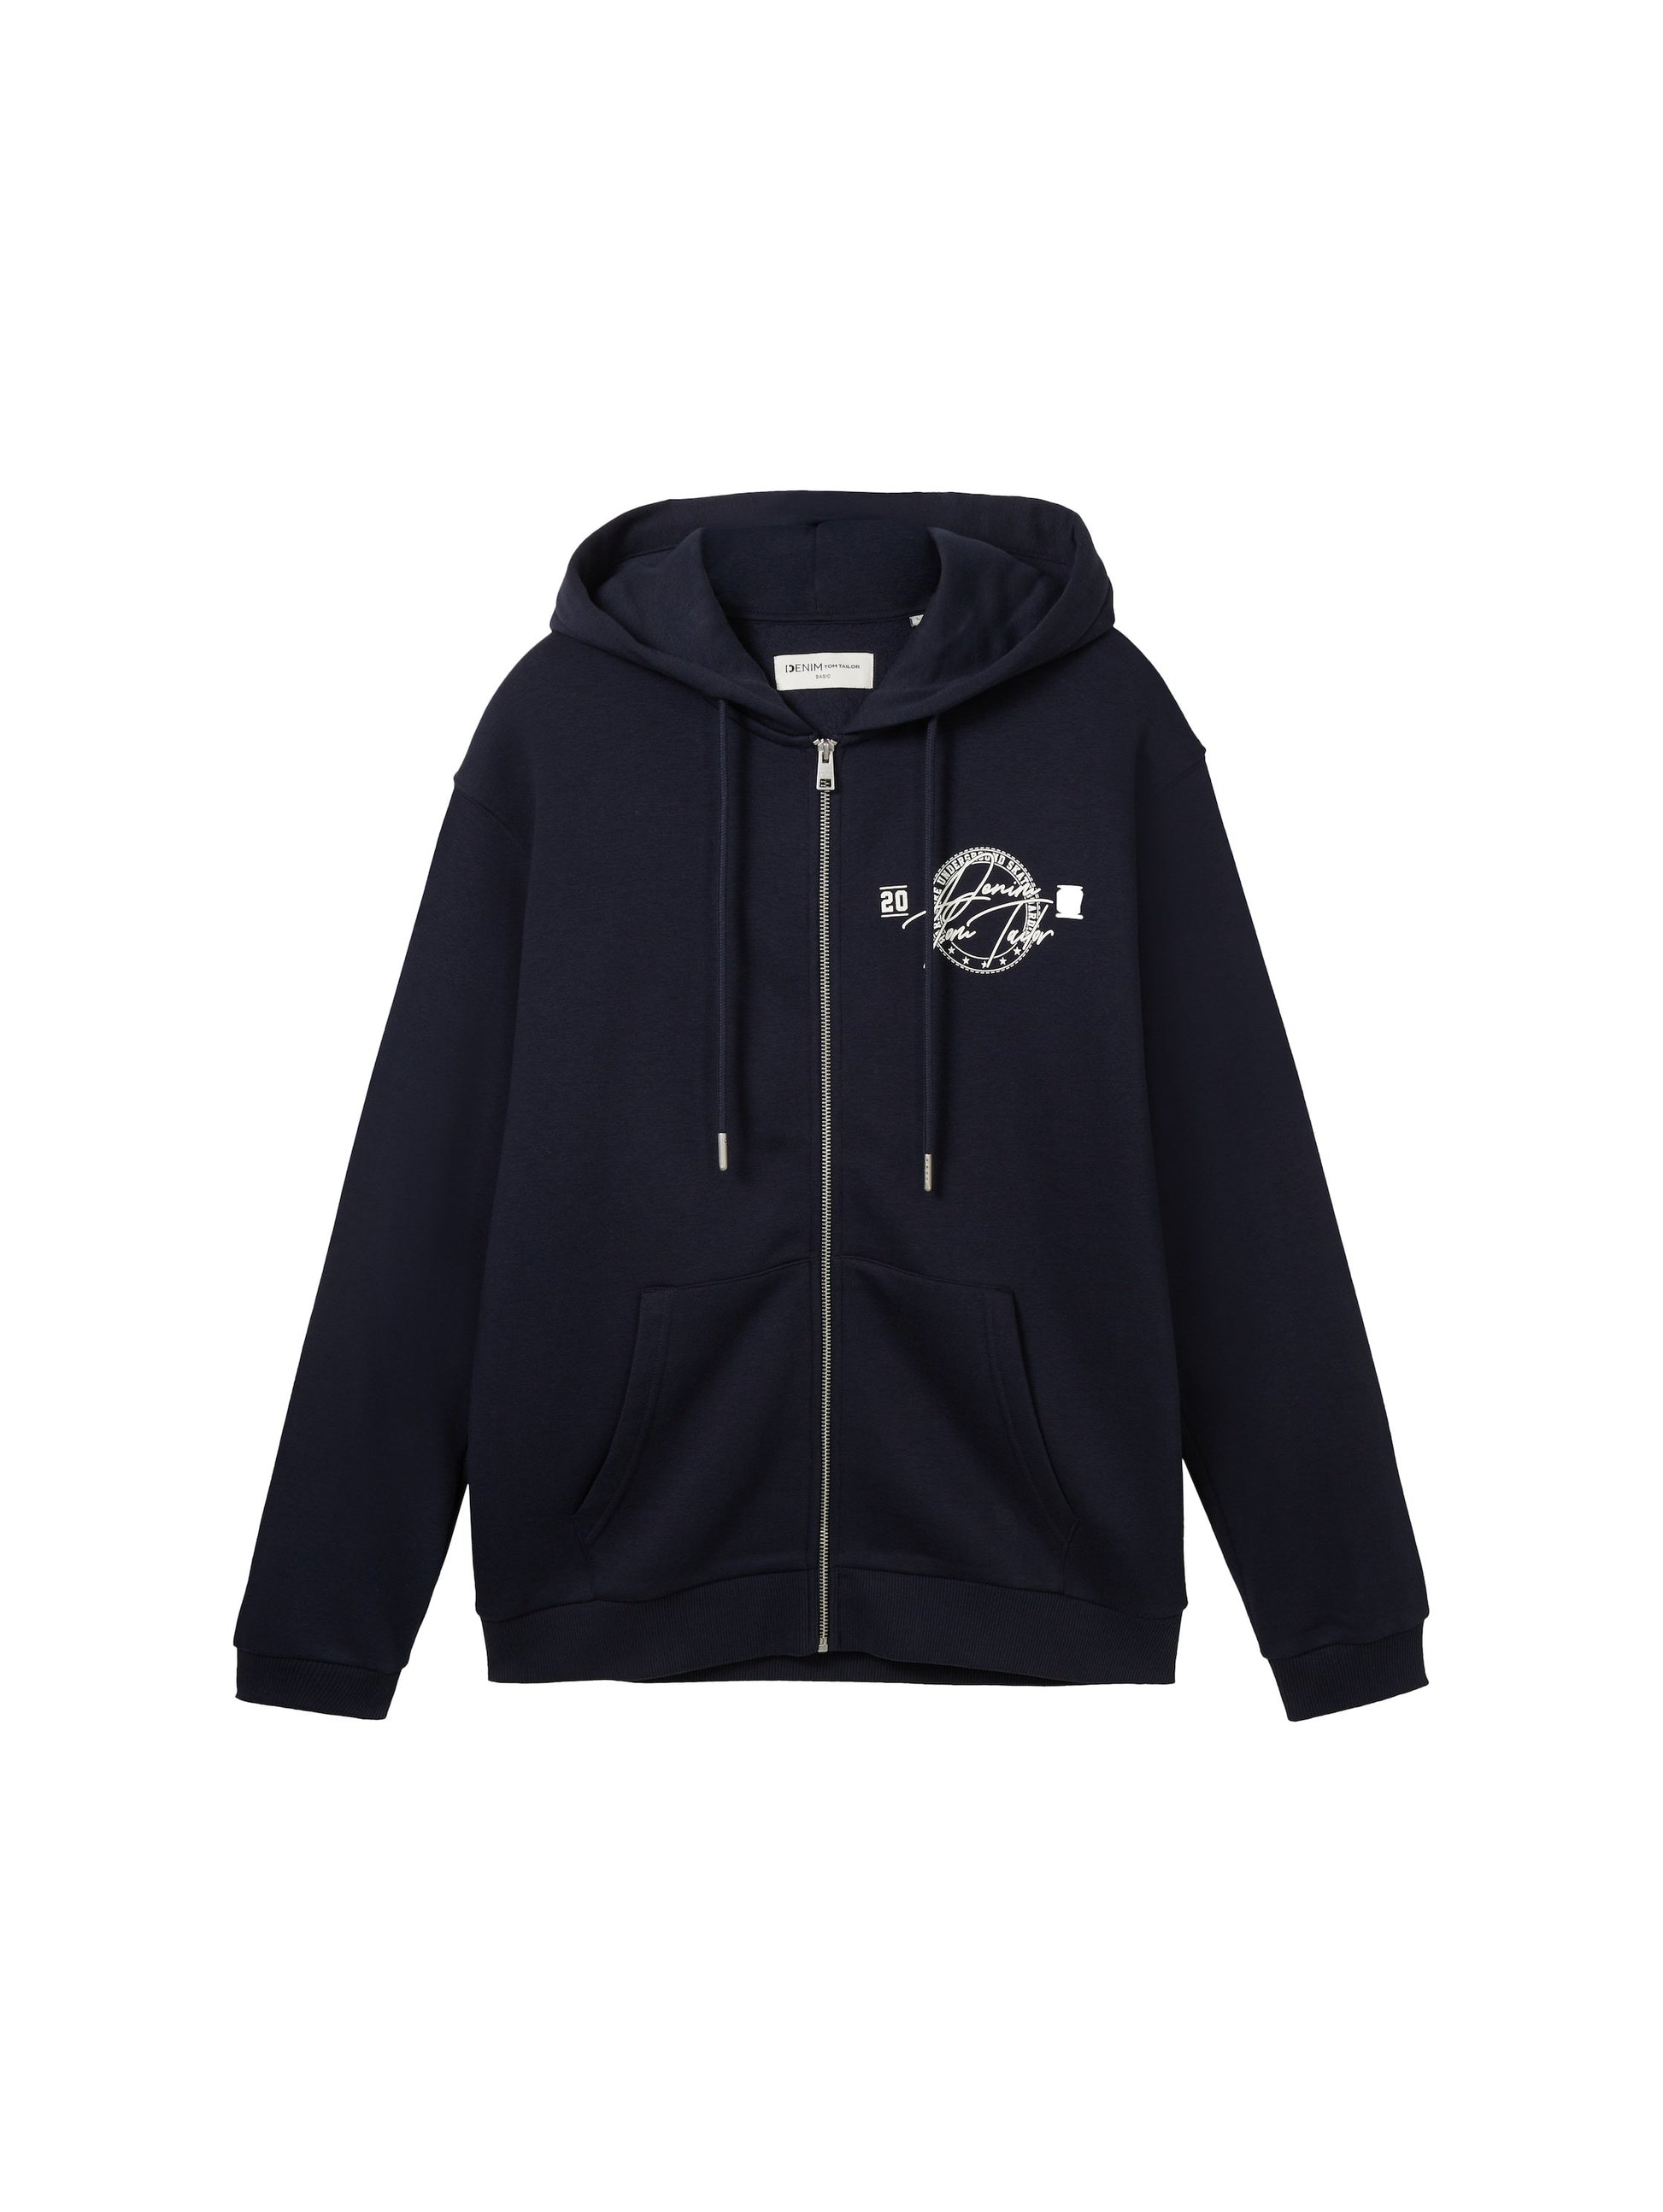 print jacket – Blum-Jundt hoodie with Modehaus